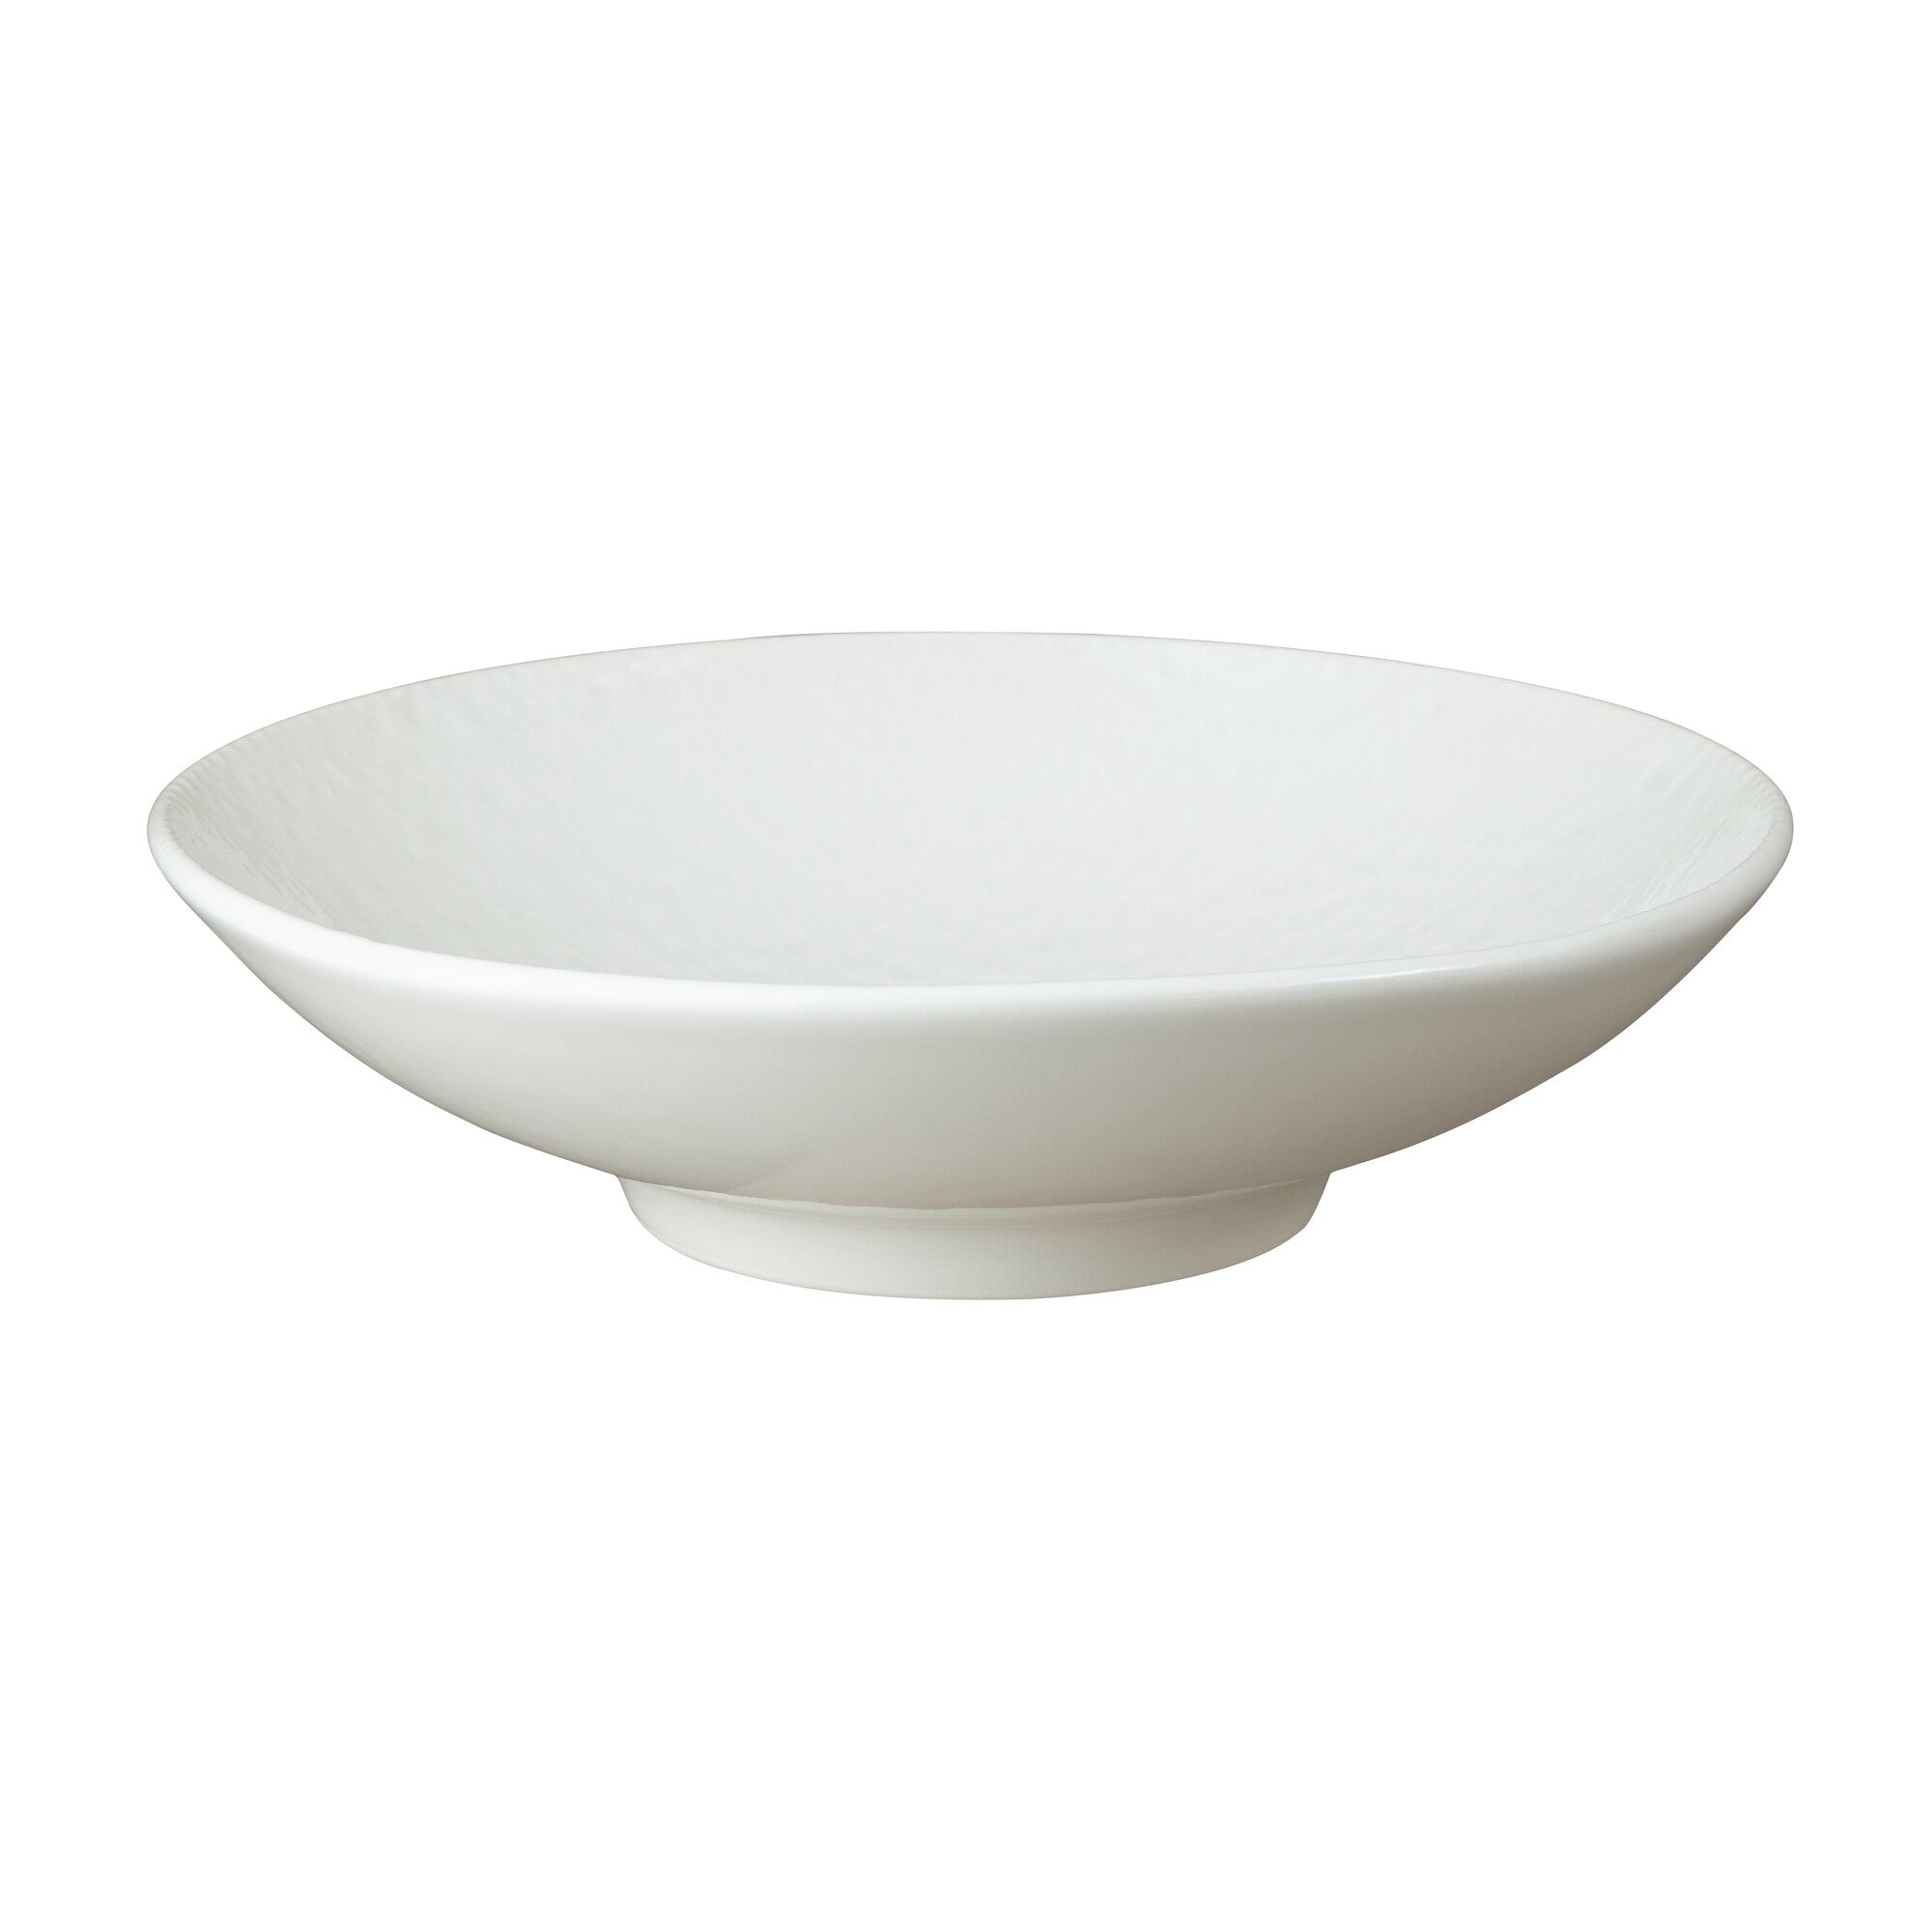 Denby Carve White Porcelain Pasta Bowl